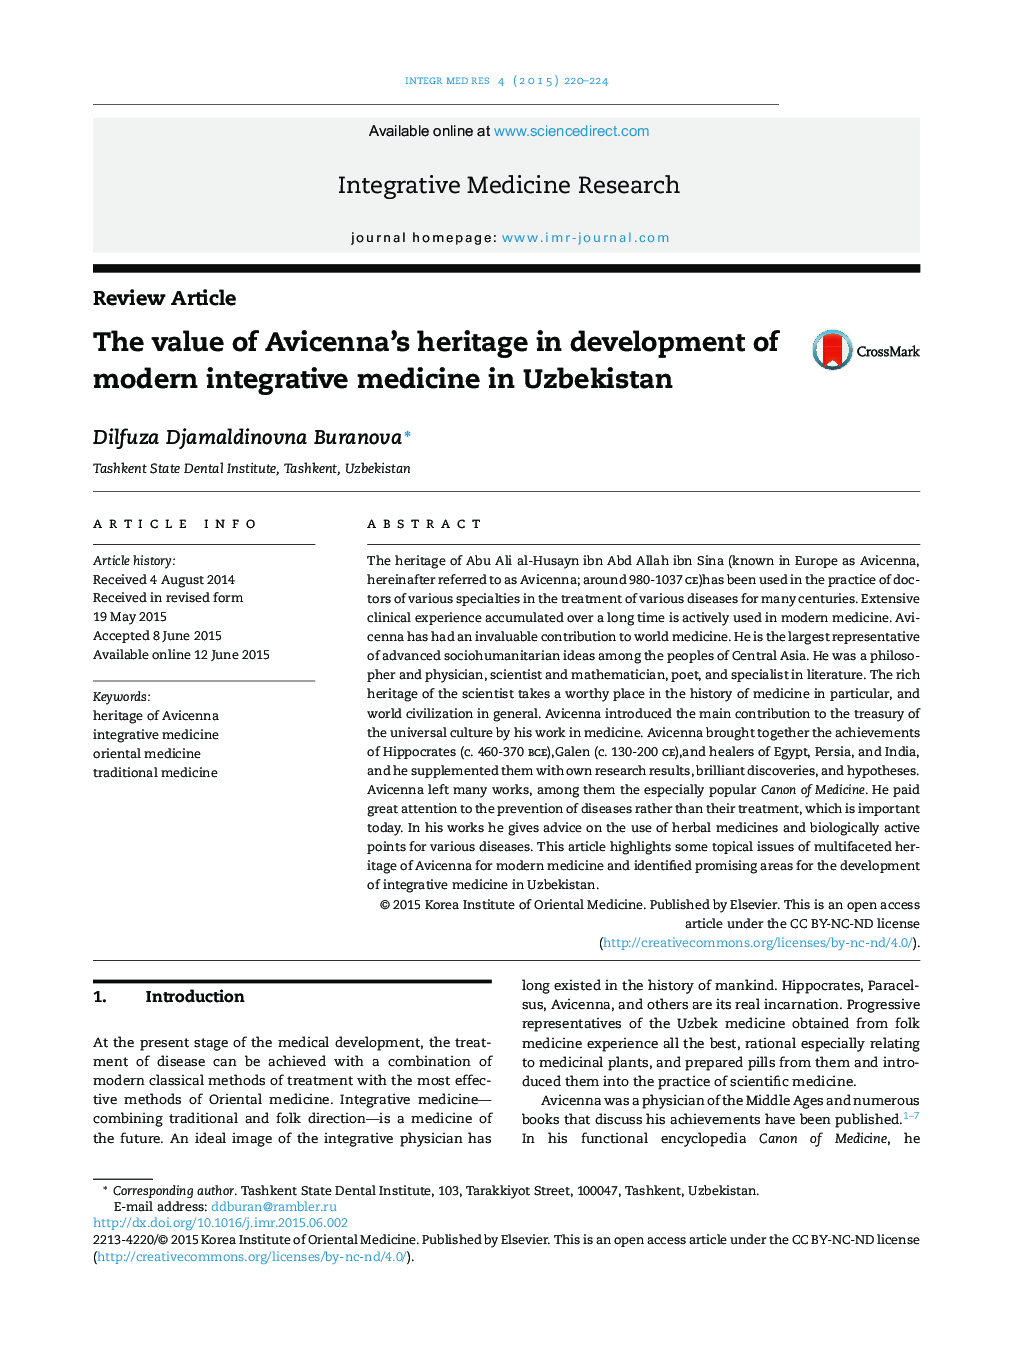 The value of Avicenna's heritage in development of modern integrative medicine in Uzbekistan